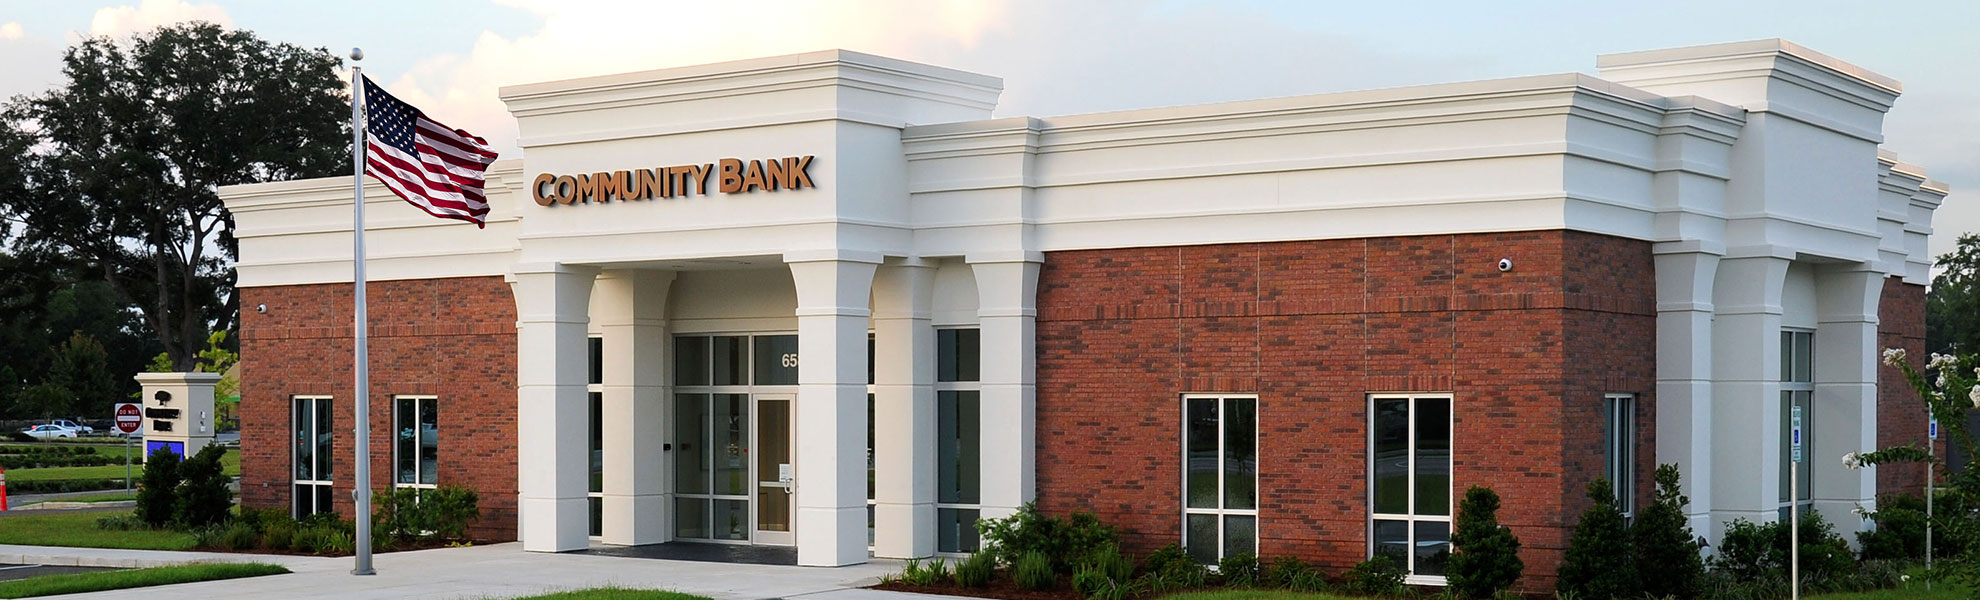 Community Bank | Community Bank Announces Regional Promotions ...